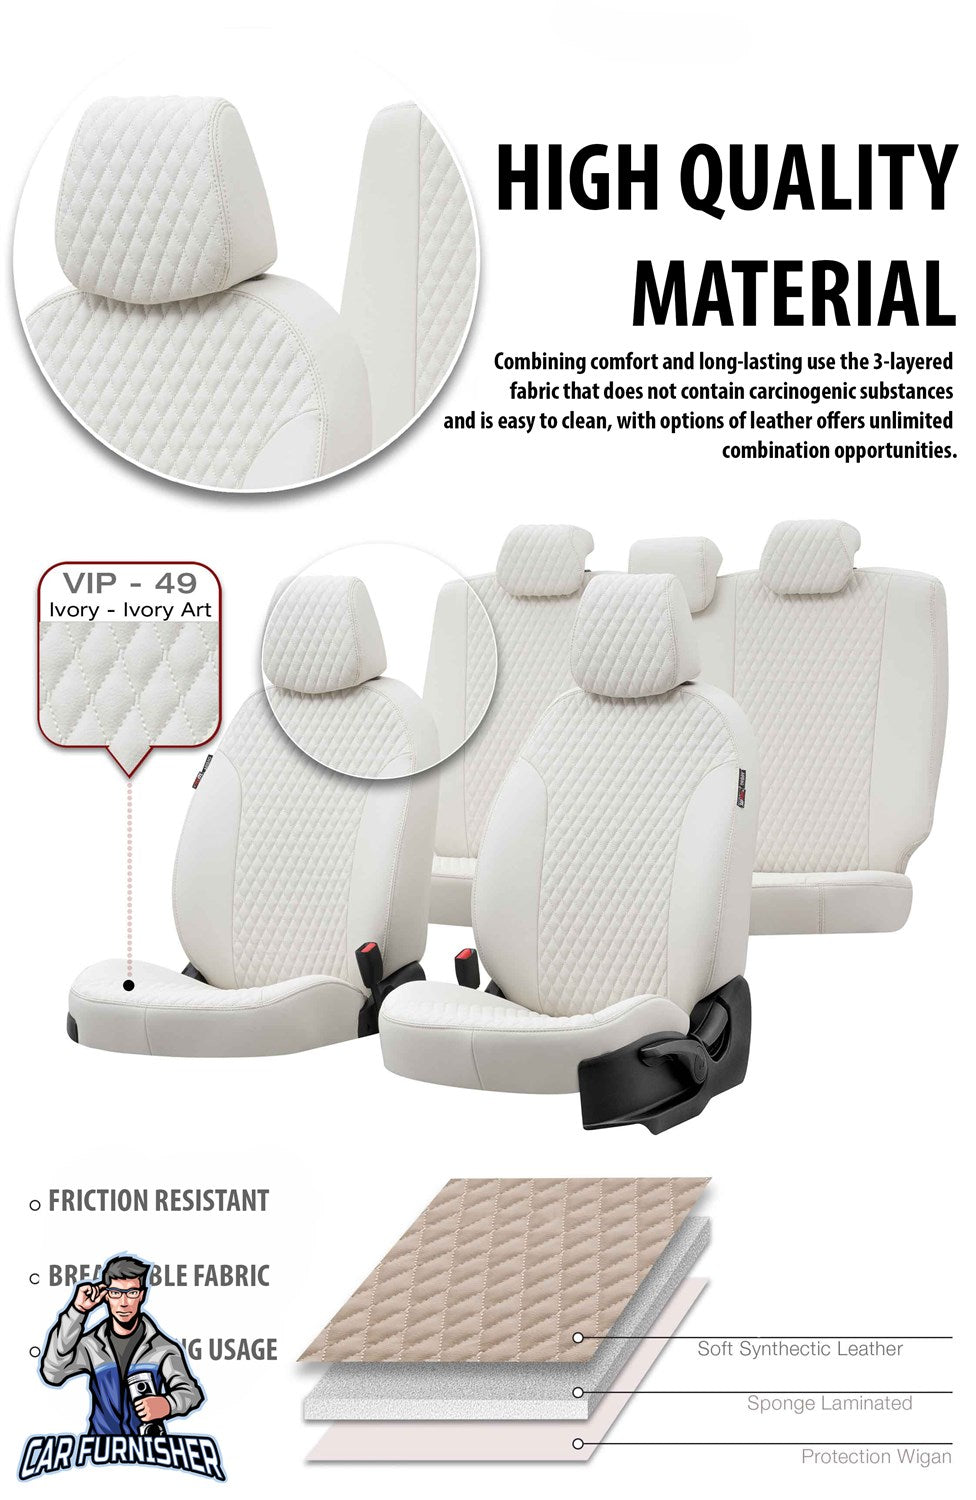 Volkswagen Amarok Seat Cover Amsterdam Leather Design Black Leather